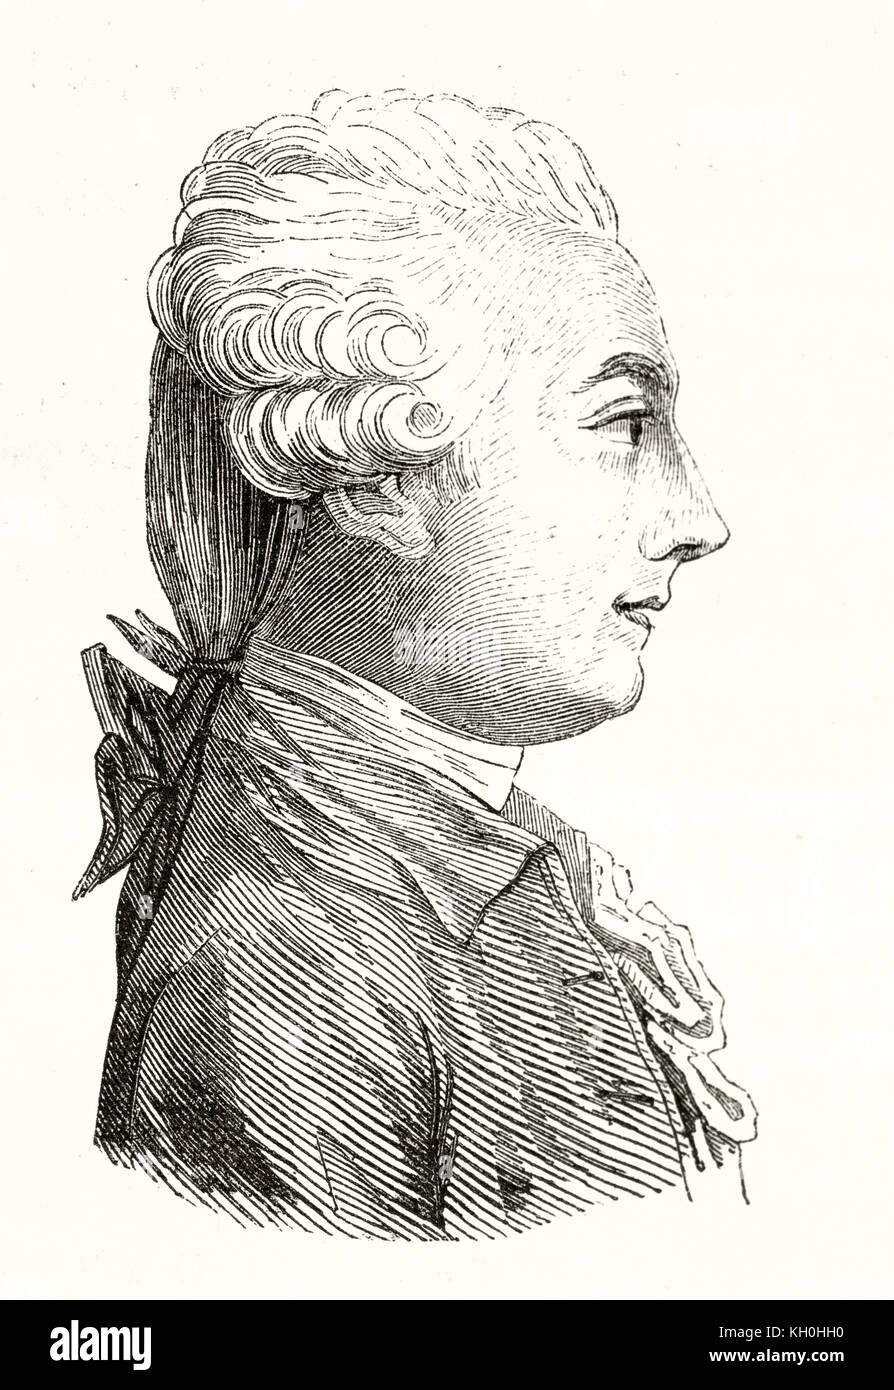 Old engraved portrait of Louis Claude de Saint-Martin (1743 – 1803), French philosopher. By unknown author, publ. on Magasin Pittoresque, Paris, 1847 Stock Photo